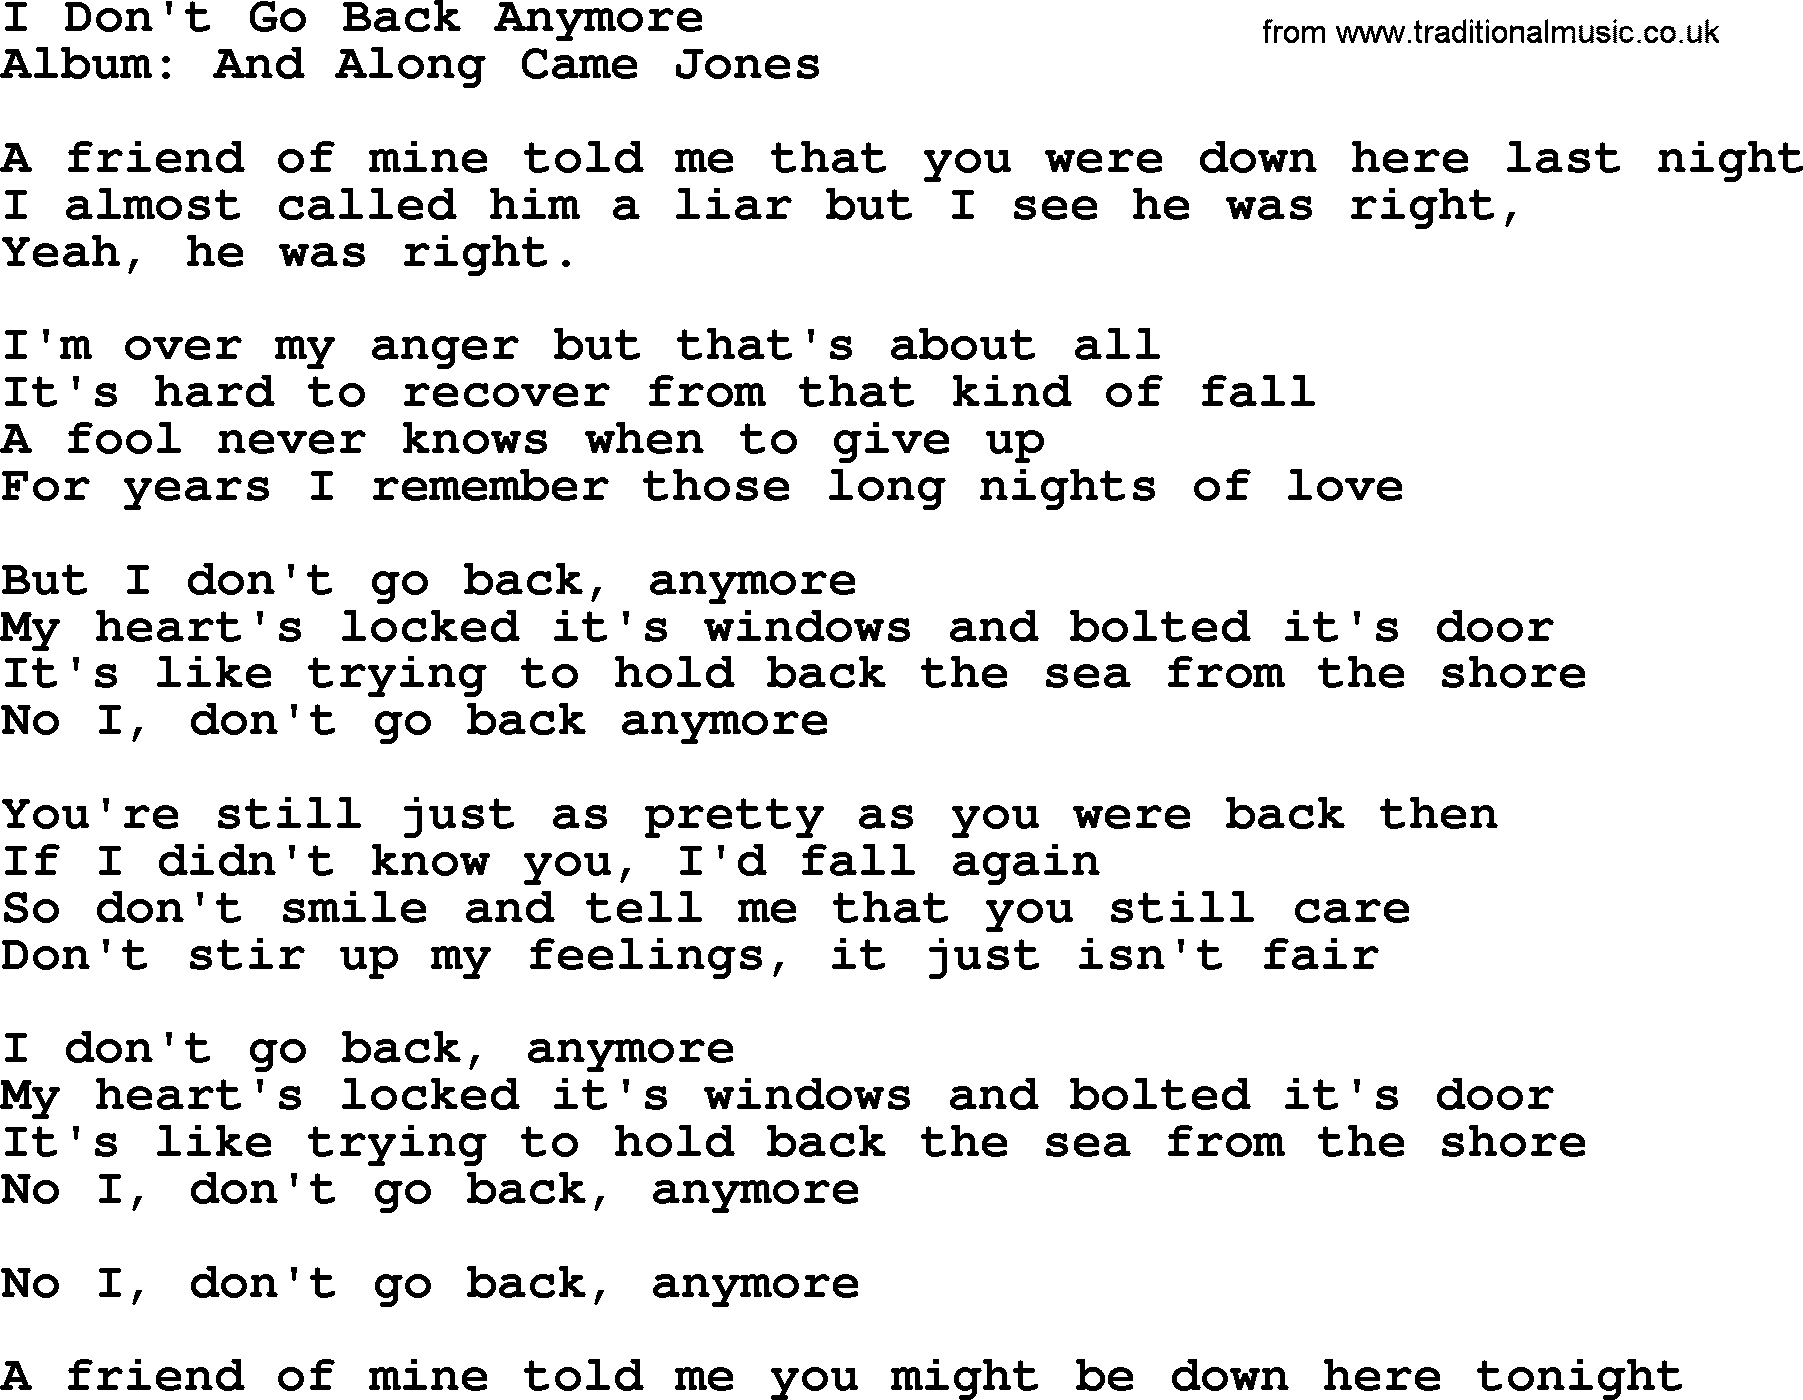 George Jones song: I Don't Go Back Anymore, lyrics